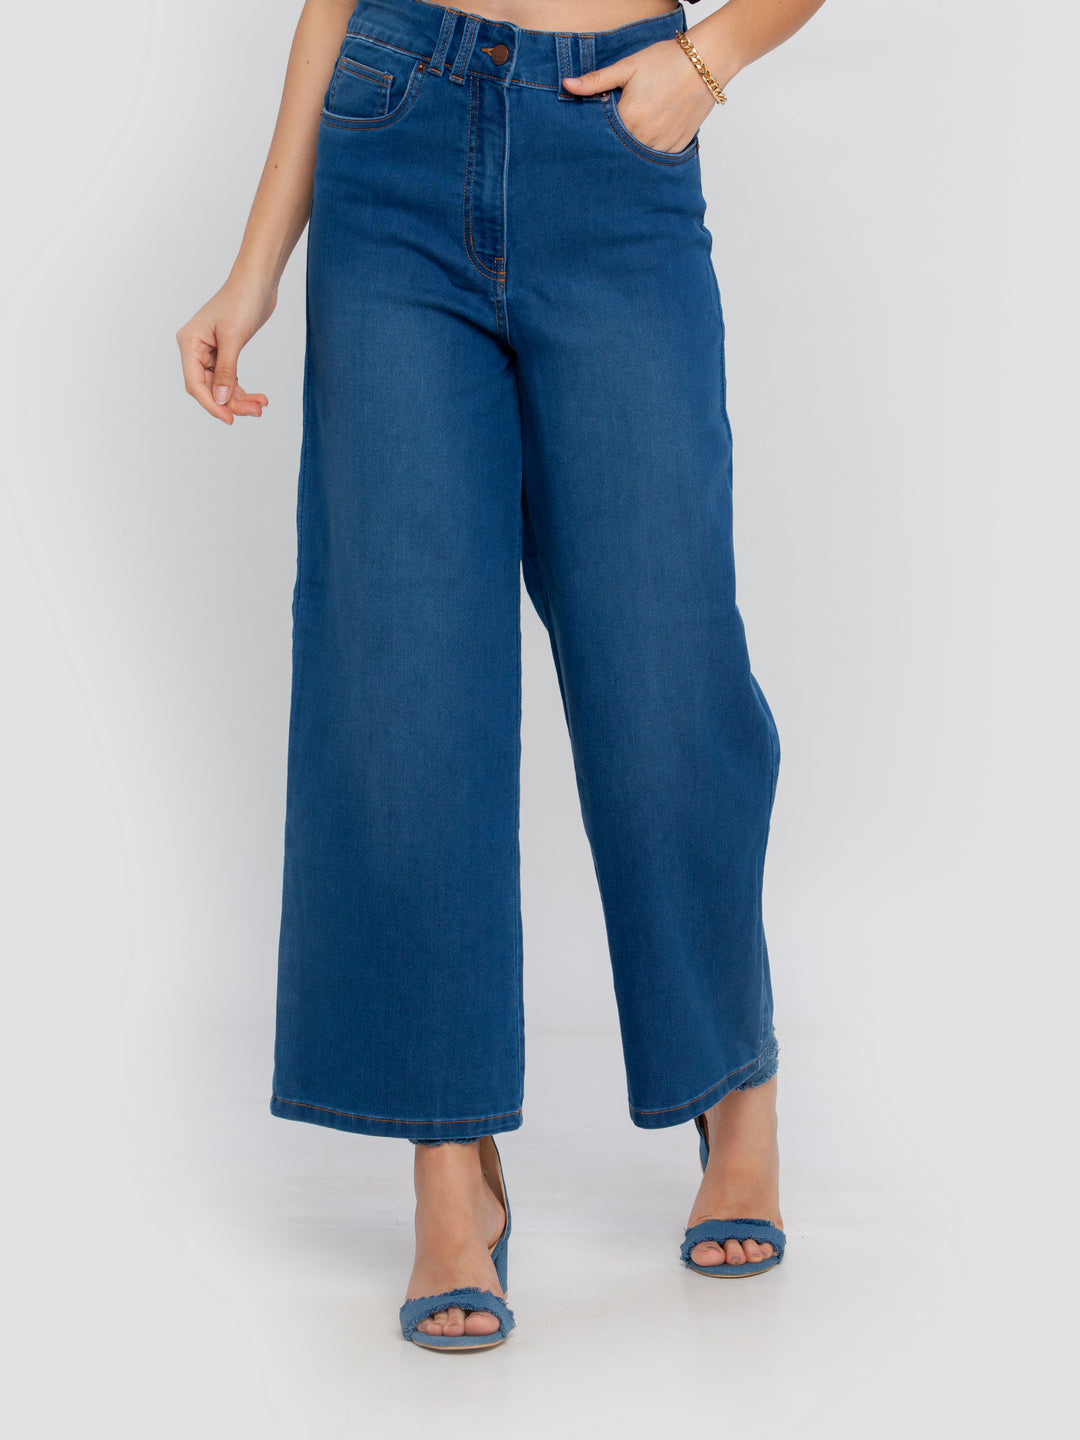 Blue Solid Wide Leg Jeans For Women